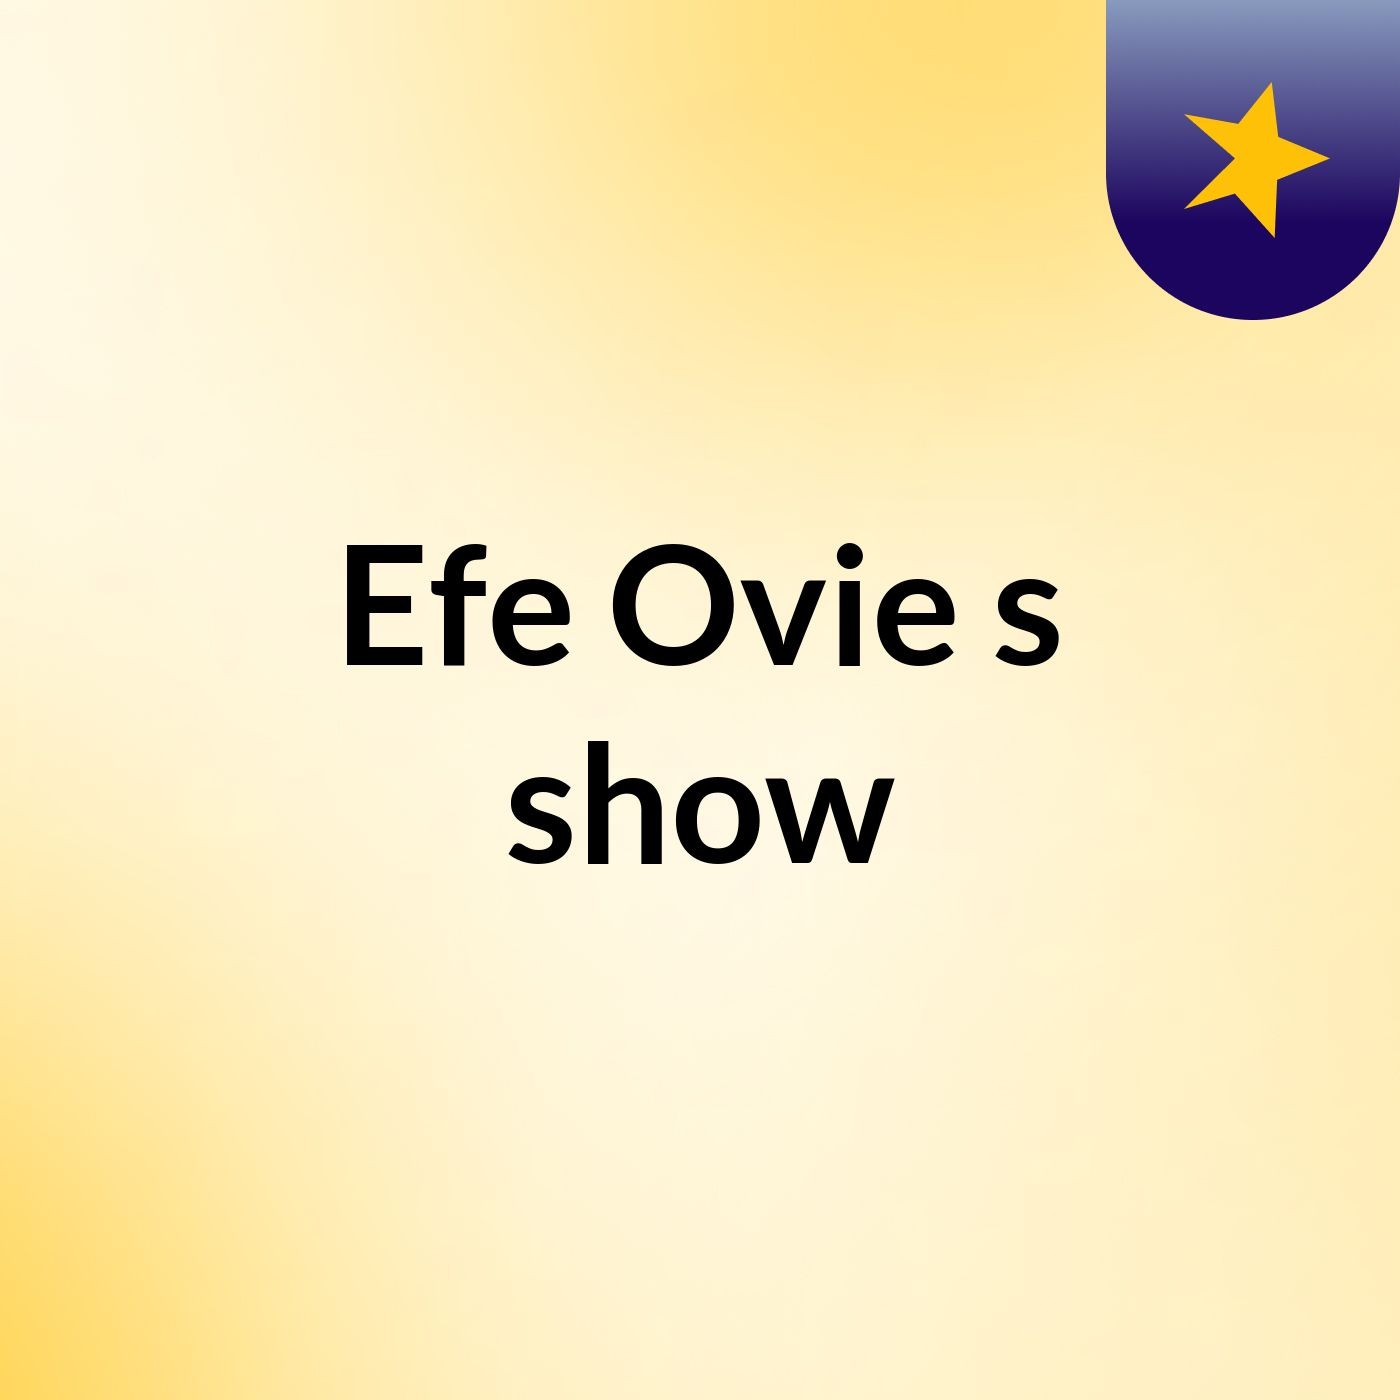 Efe Ovie's show